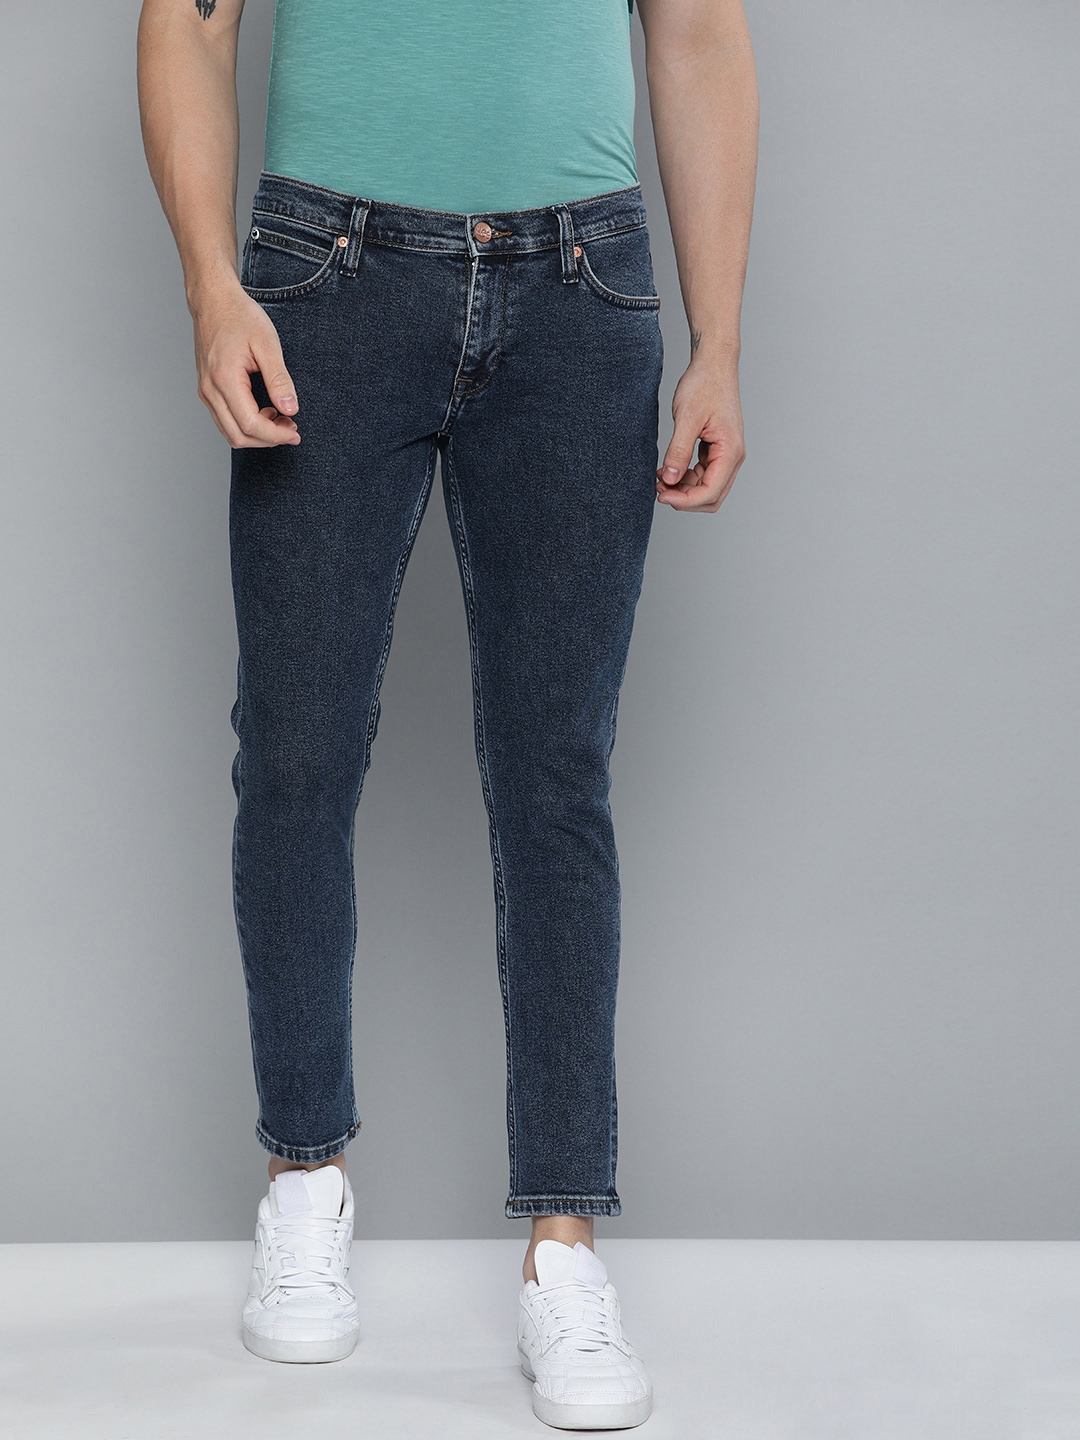 lee low waist jeans